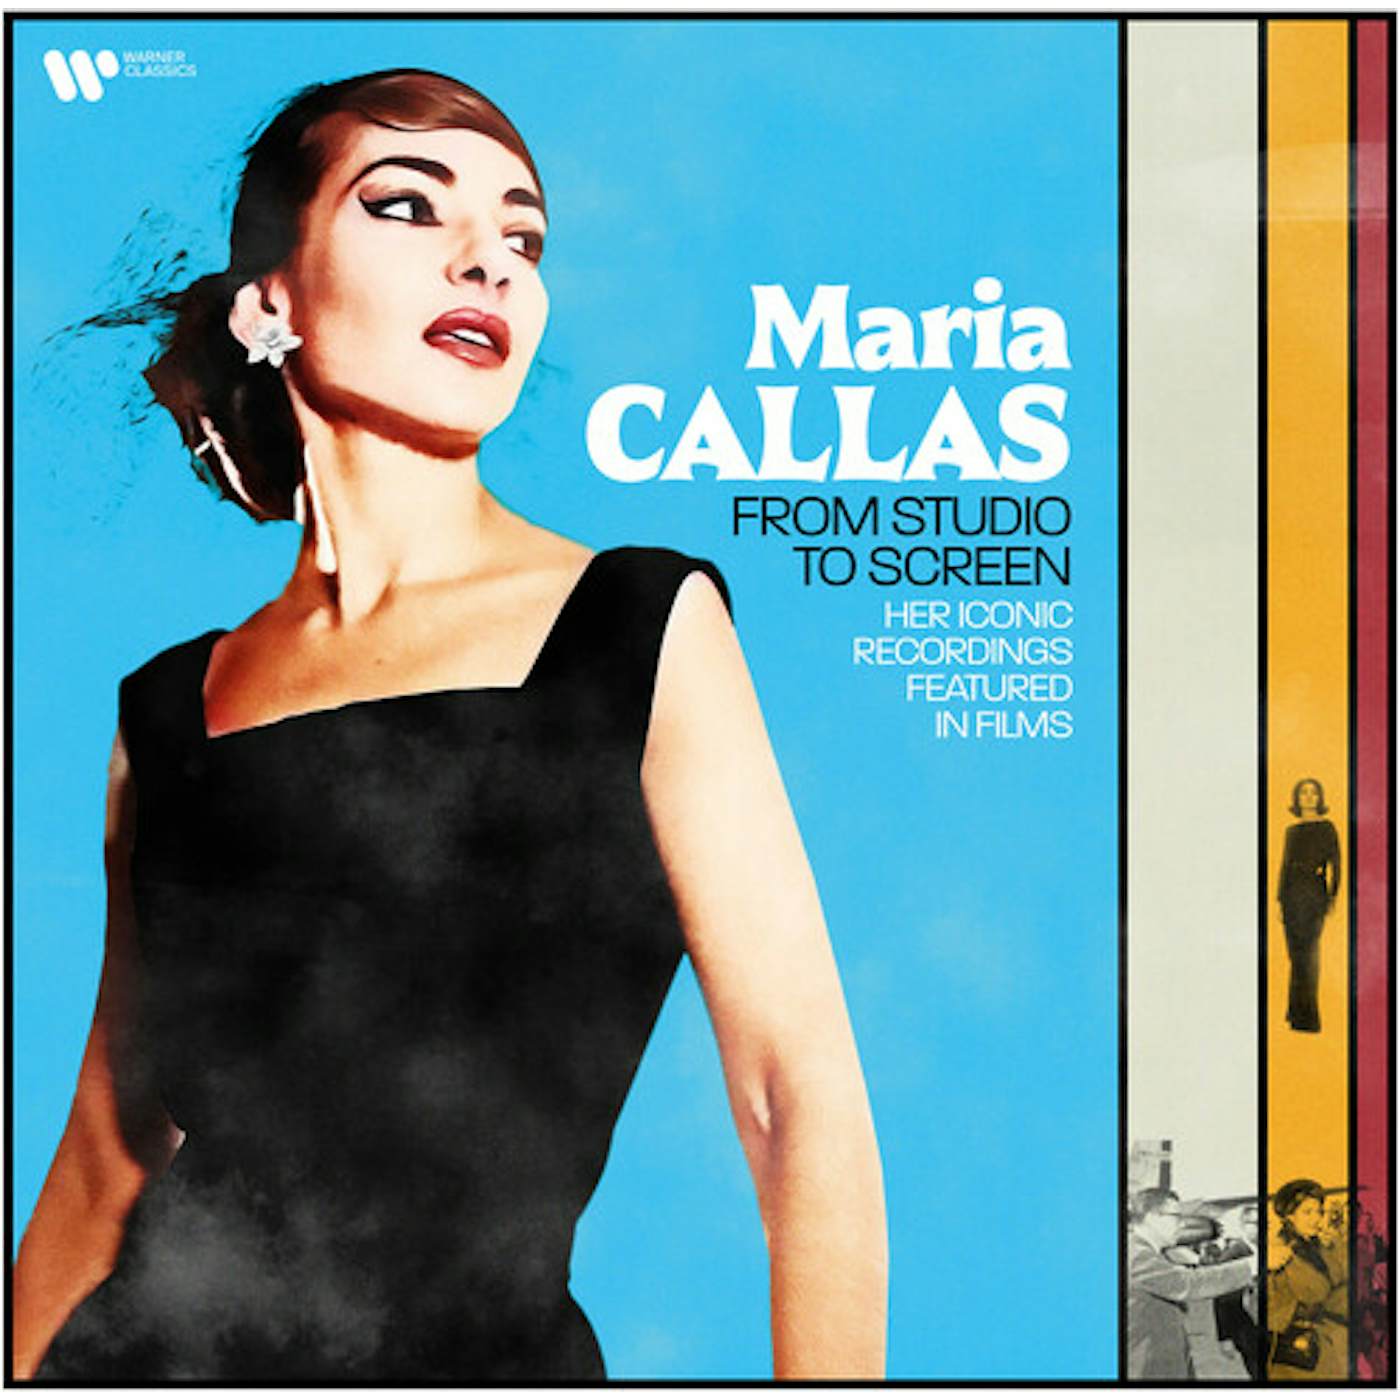 Maria Callas From Studio To Screen Vinyl Record